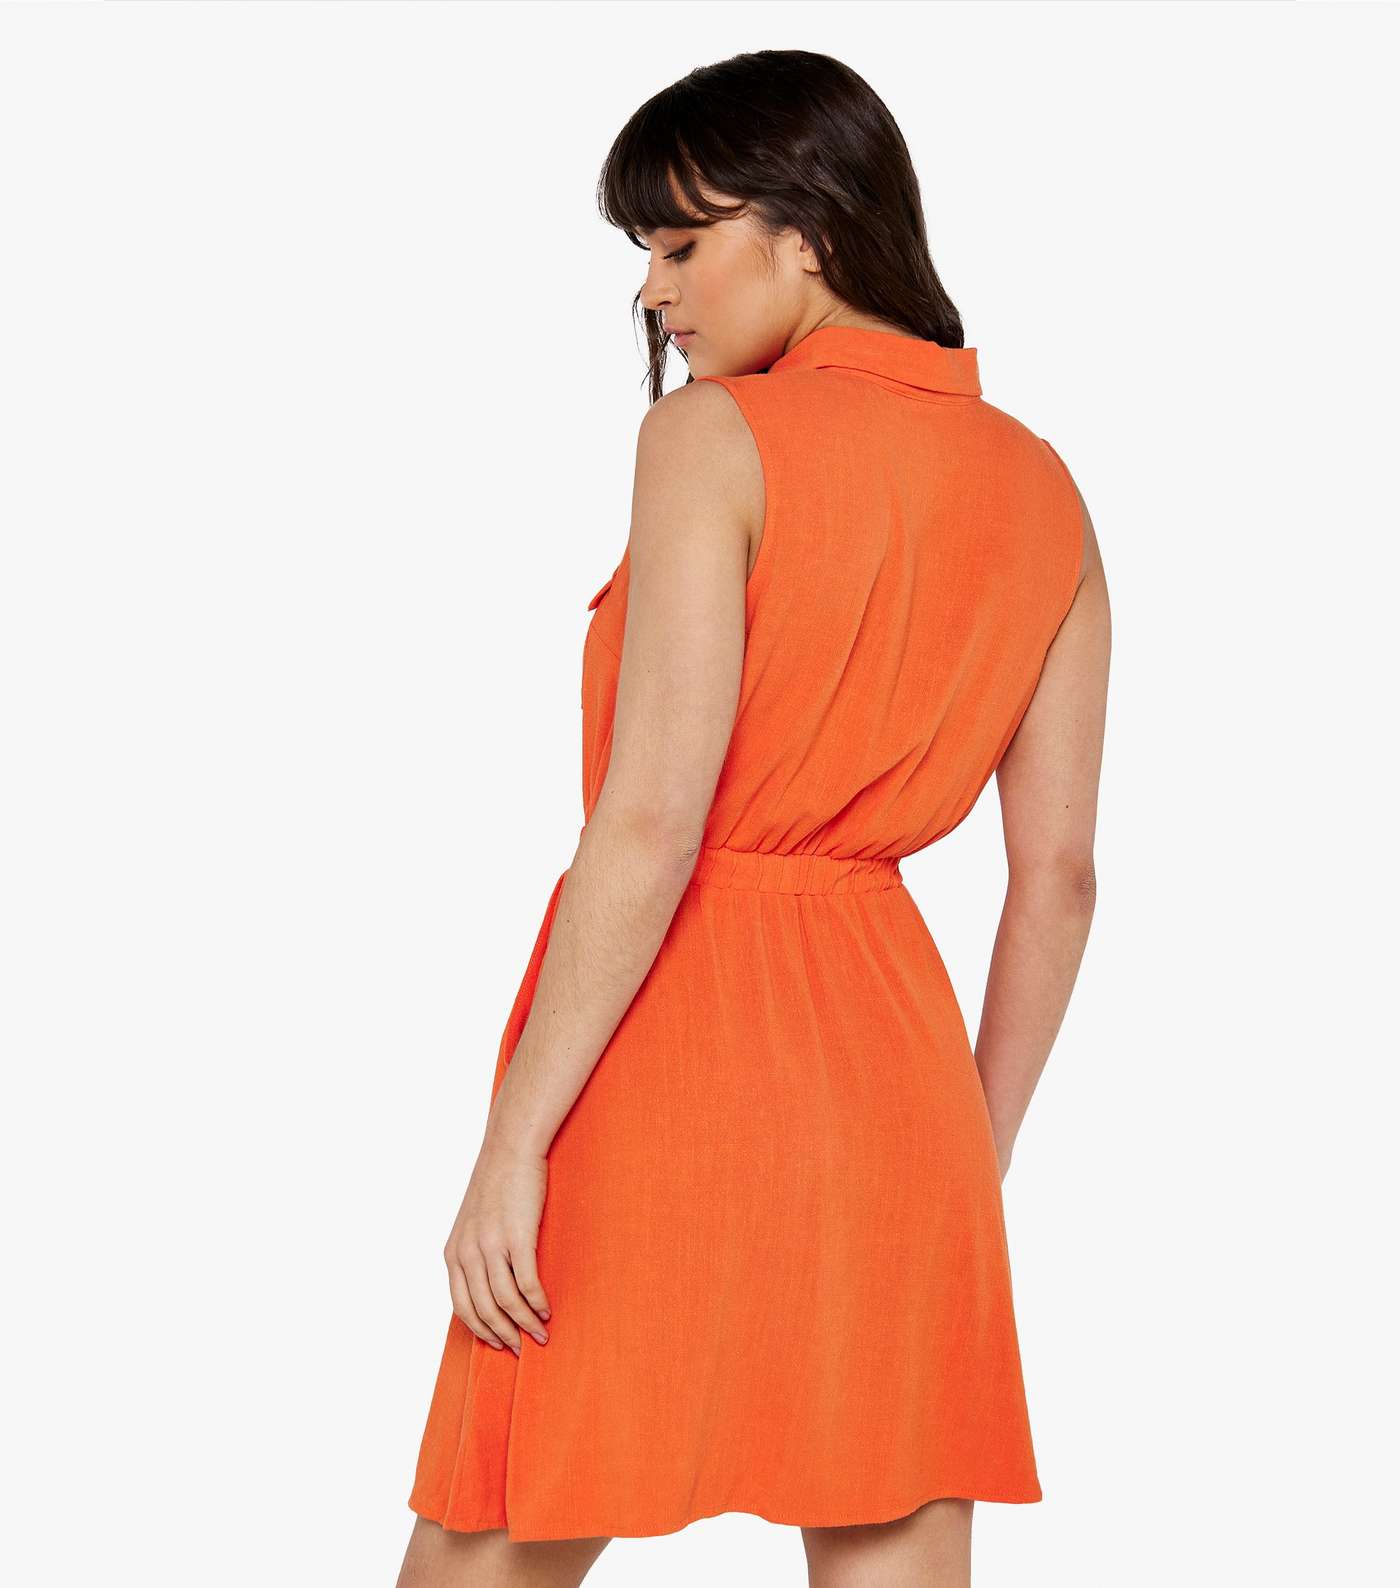 Apricot Bright Orange Sleeveless Mini Shirt Dress Image 3